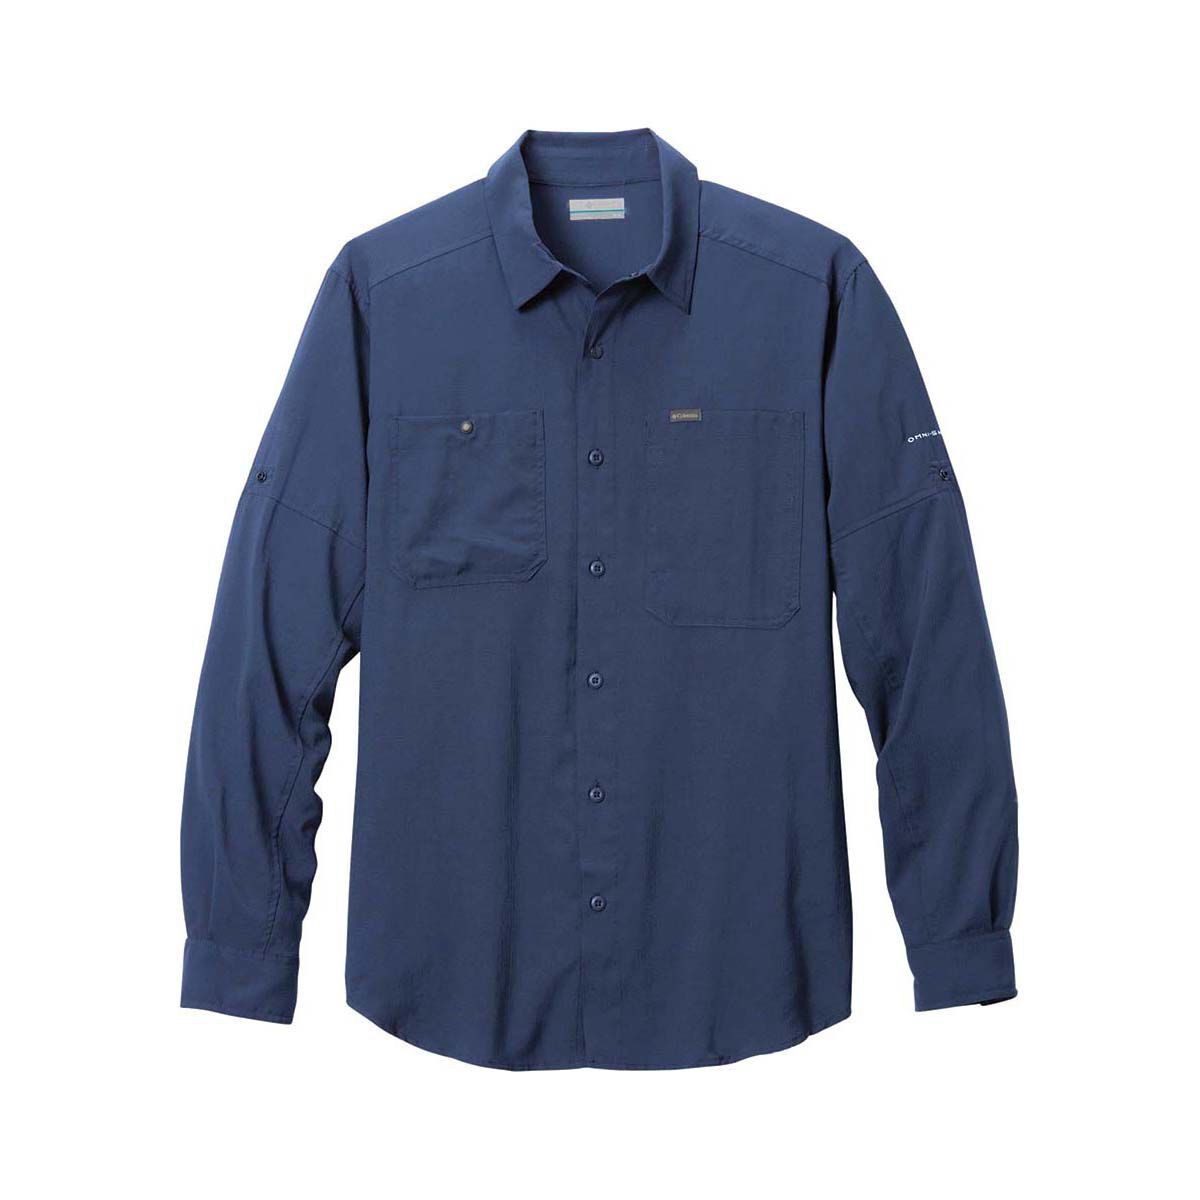 Columbia Silver Ridge Long Sleeve Shirt Reviews - Trailspace